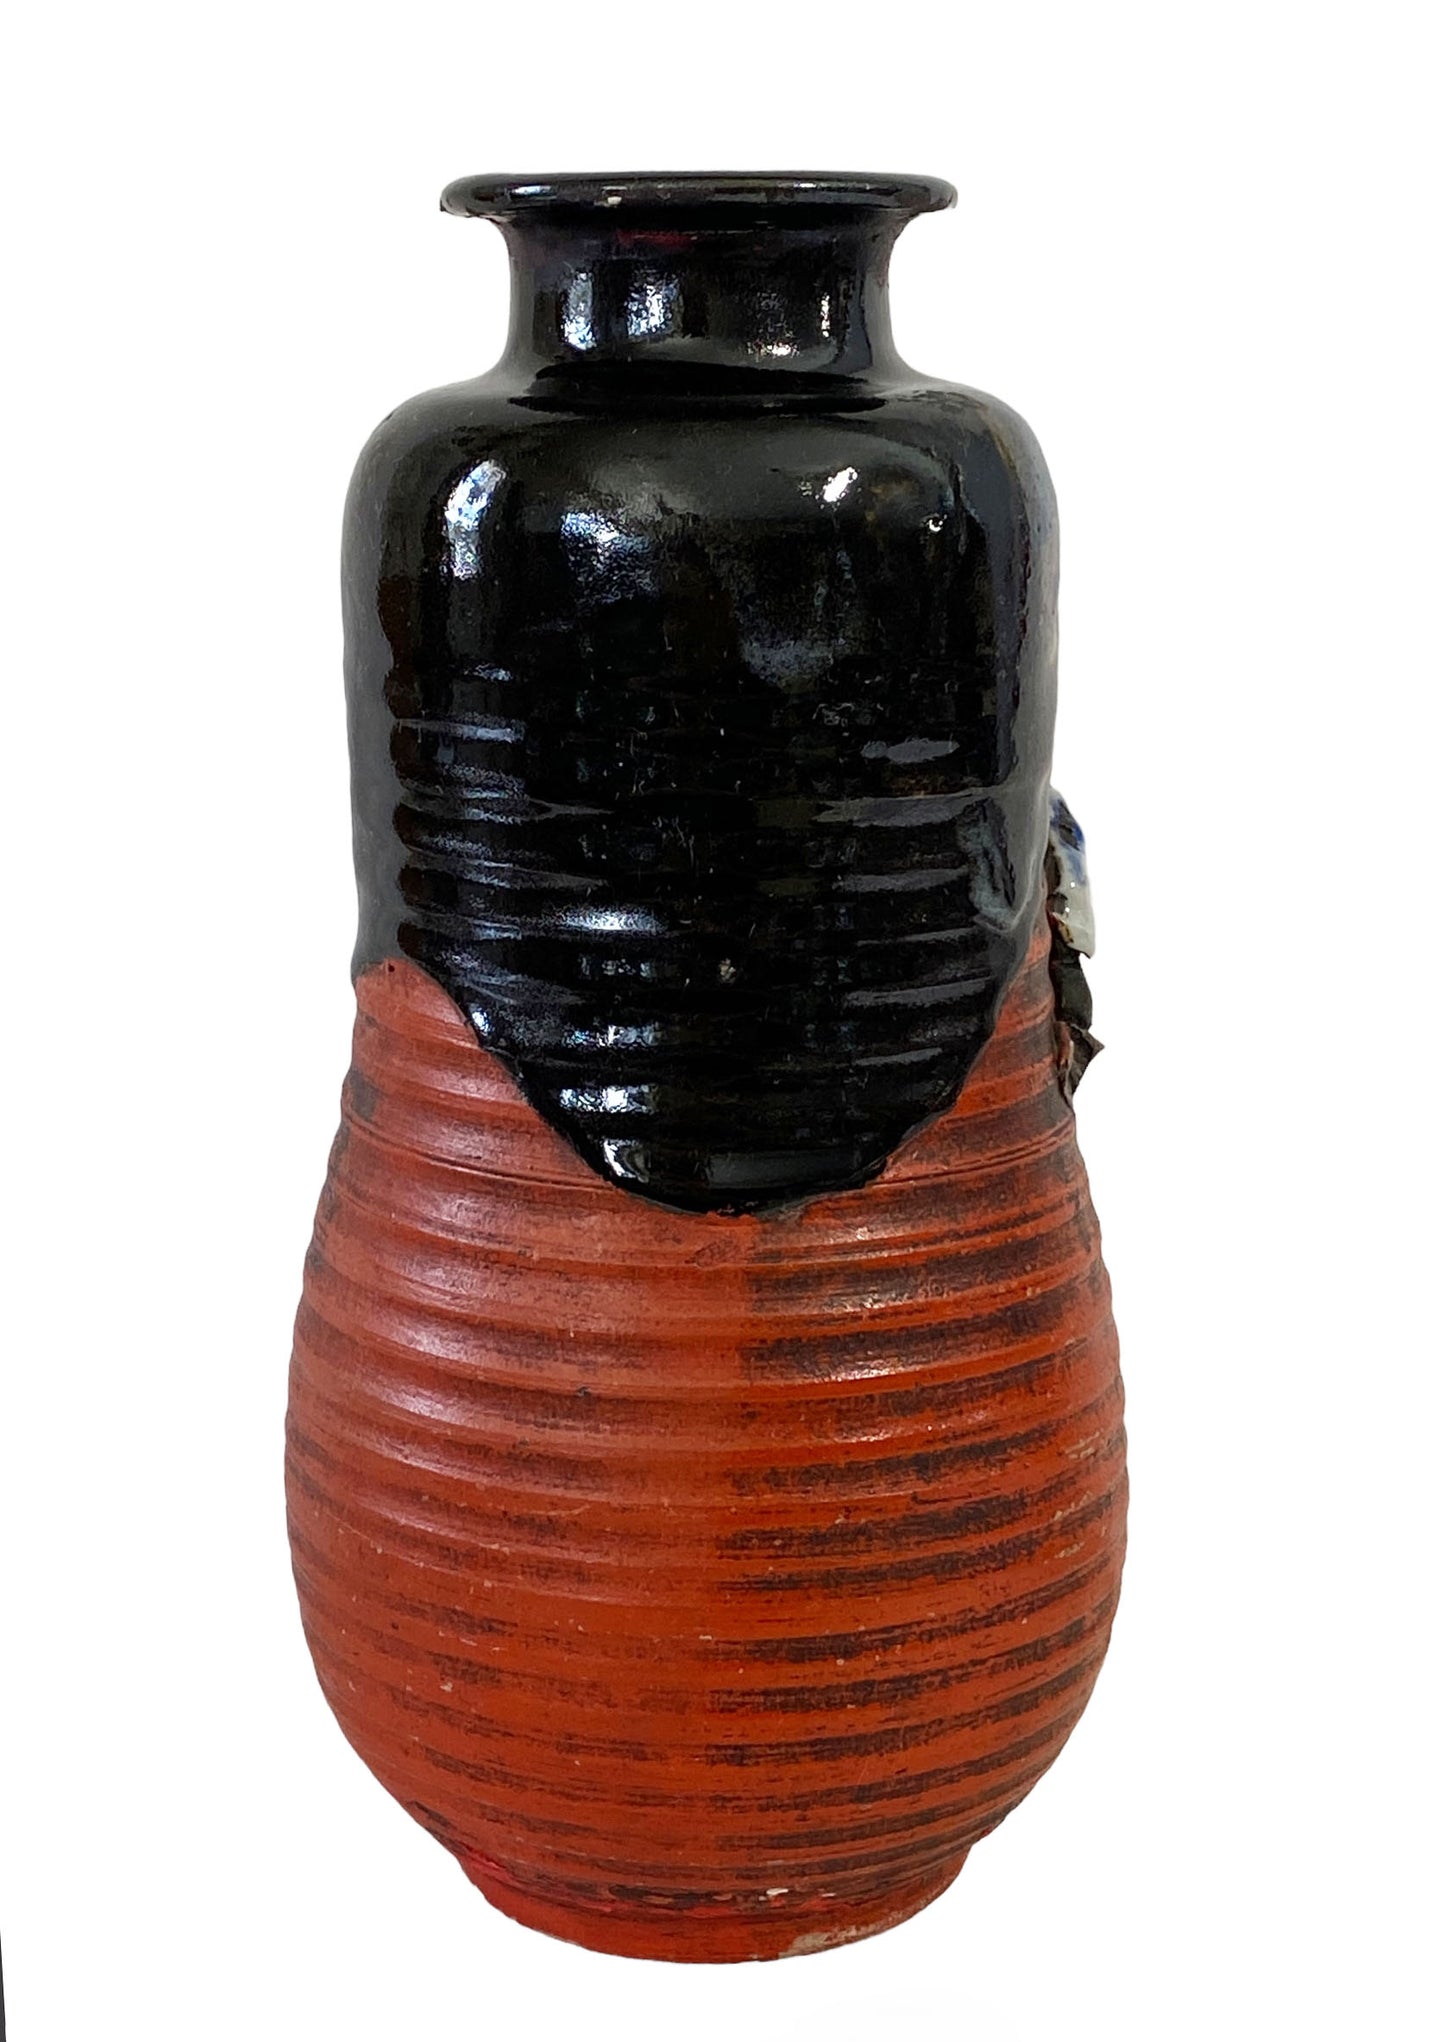 #5700 Chinoiserie Decorative Ceramic Vase w/High Relief Boys Figures 9.25"h